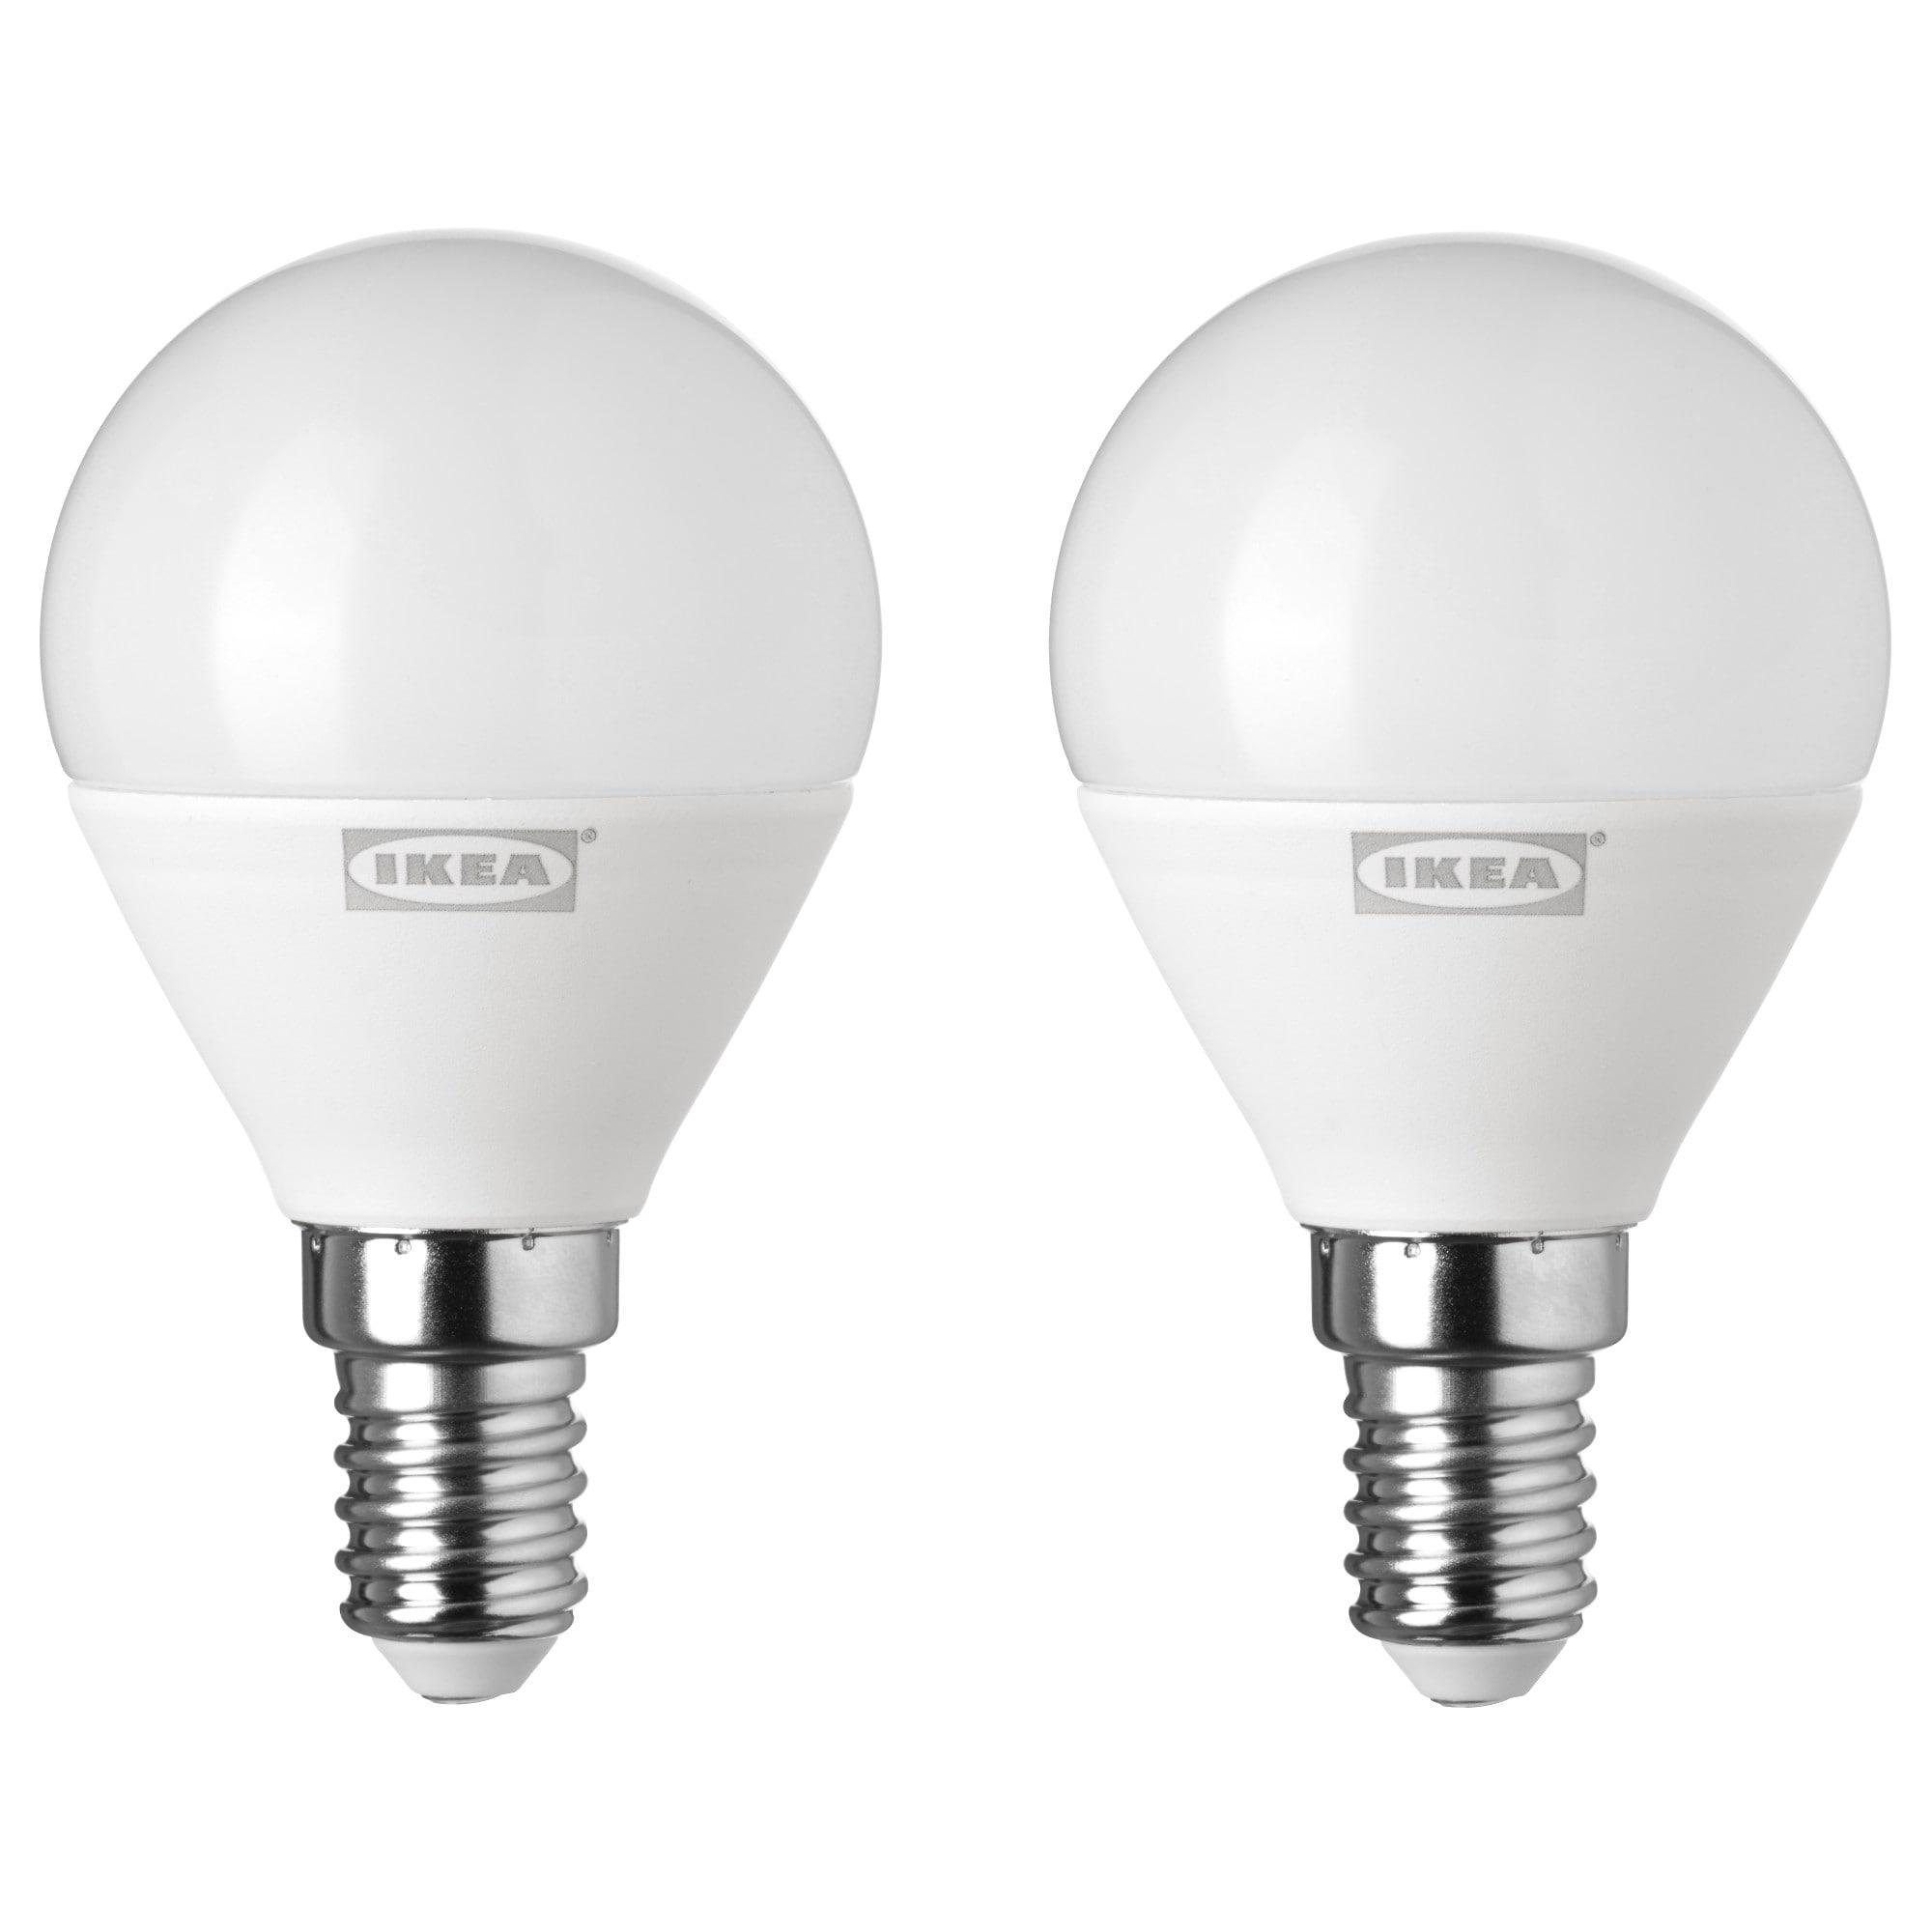 Light Bulb with Orange Circle Logo - Lighting & Lamps - LED Lighting & Lamps | IKEA